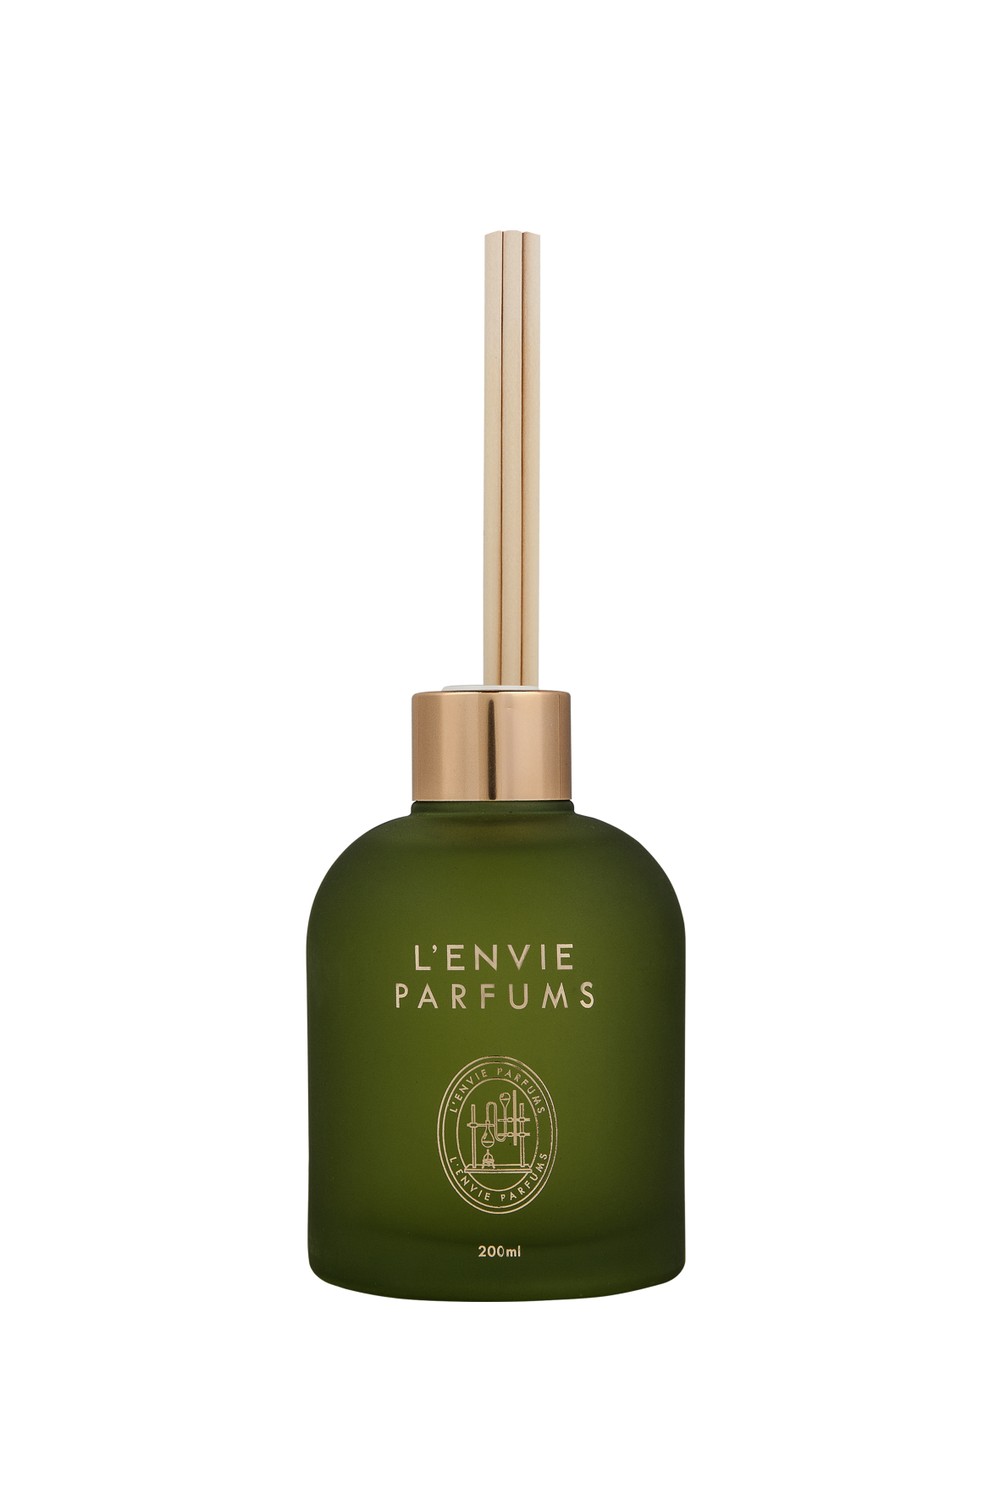 Difusor de Perfume Flor de Laranjeira - Elementos 200ml